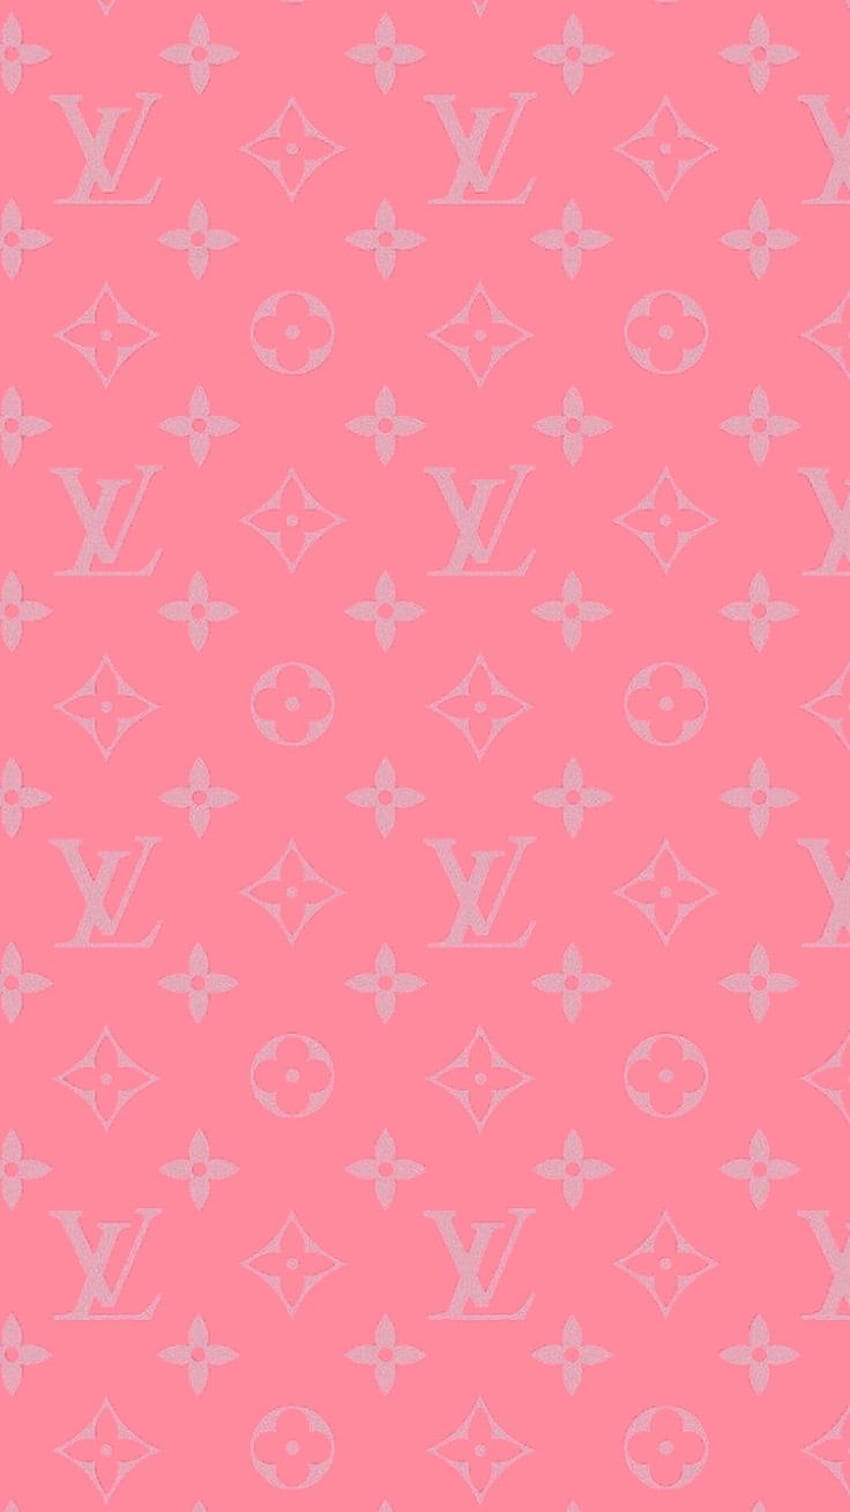 New Louis Vuitton Design by TeVesMuyNerviosa. iPhone pattern